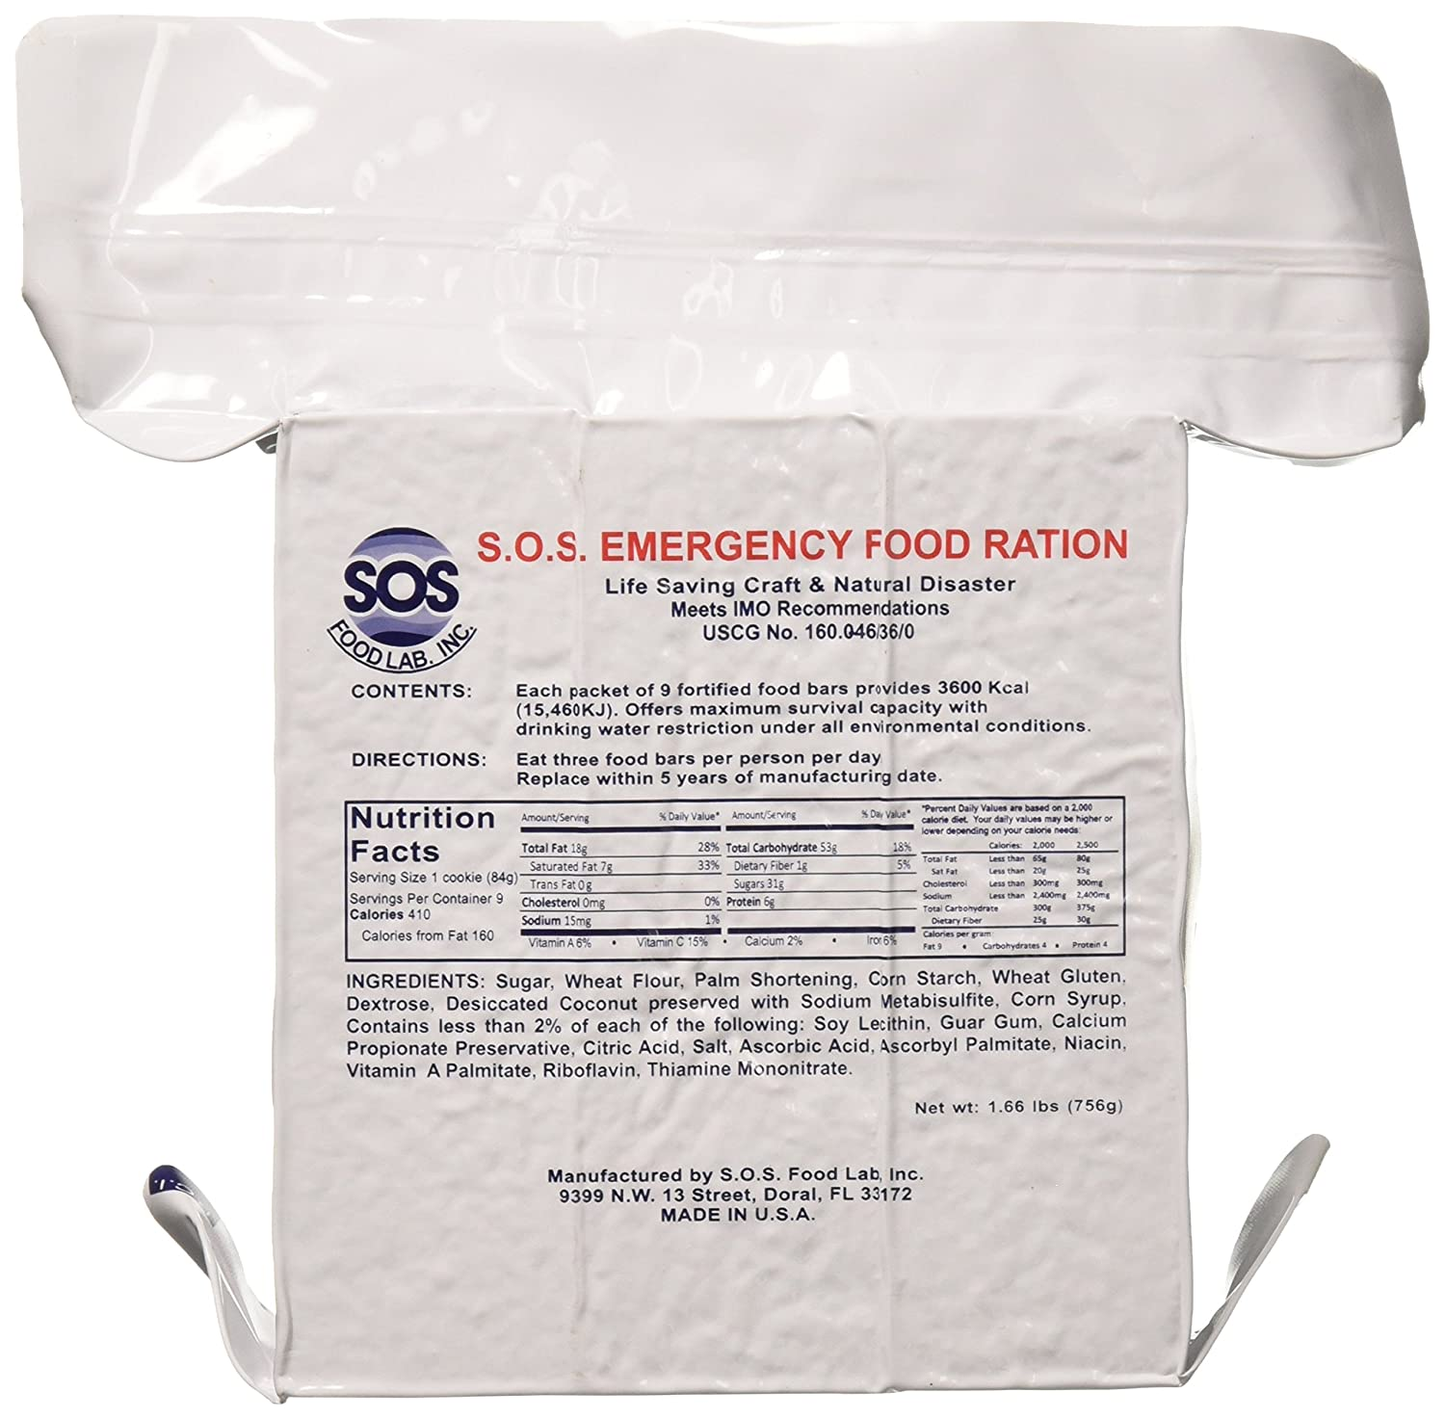 s.o.s. emergency food ration